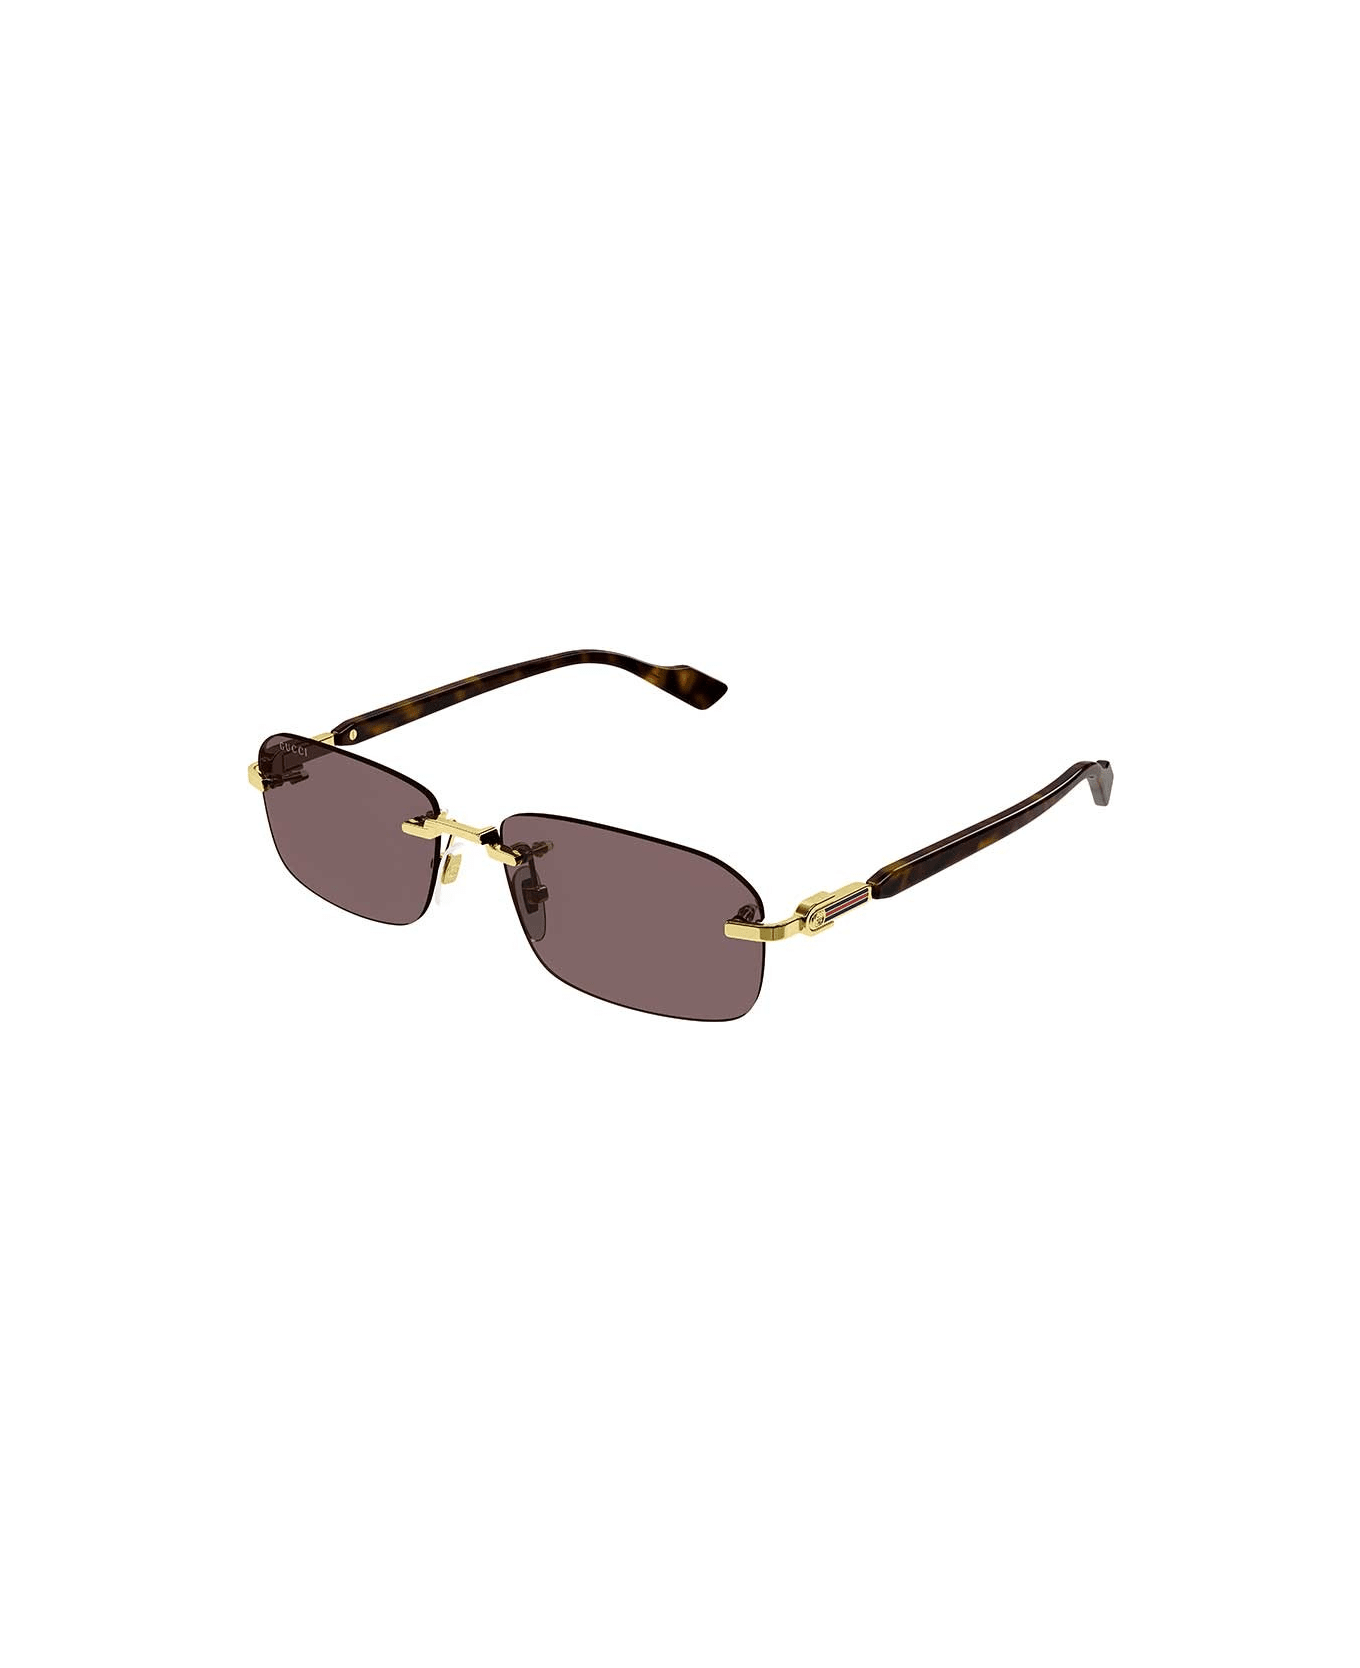 Gucci Eyewear Sunglasses - Marrone/Marrone